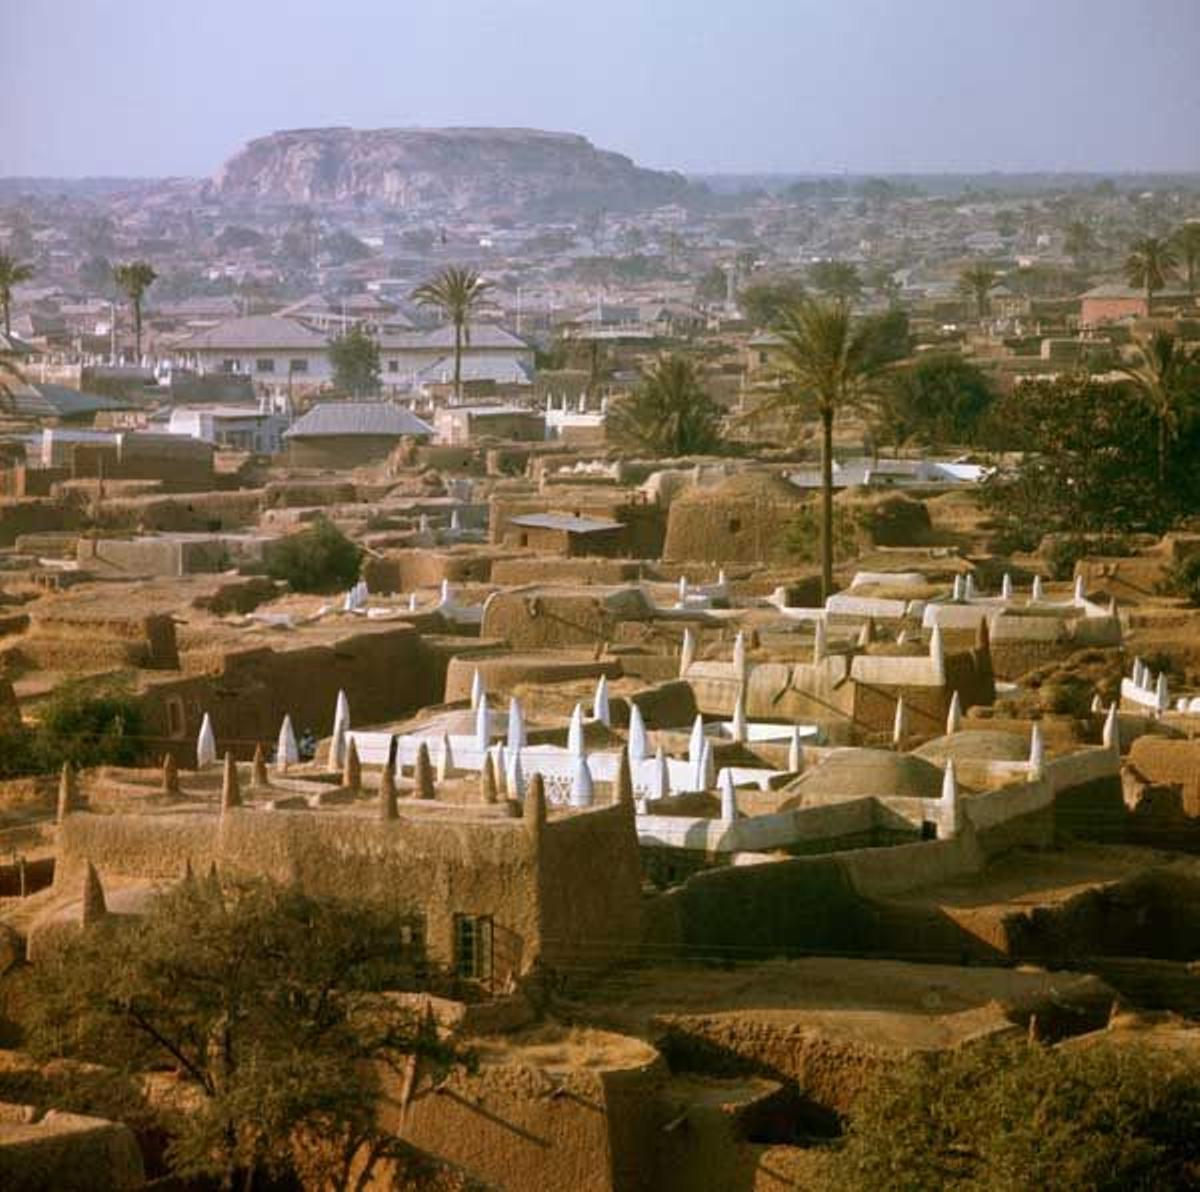 Vista panorámica de Kano, antigua capital de los hausa